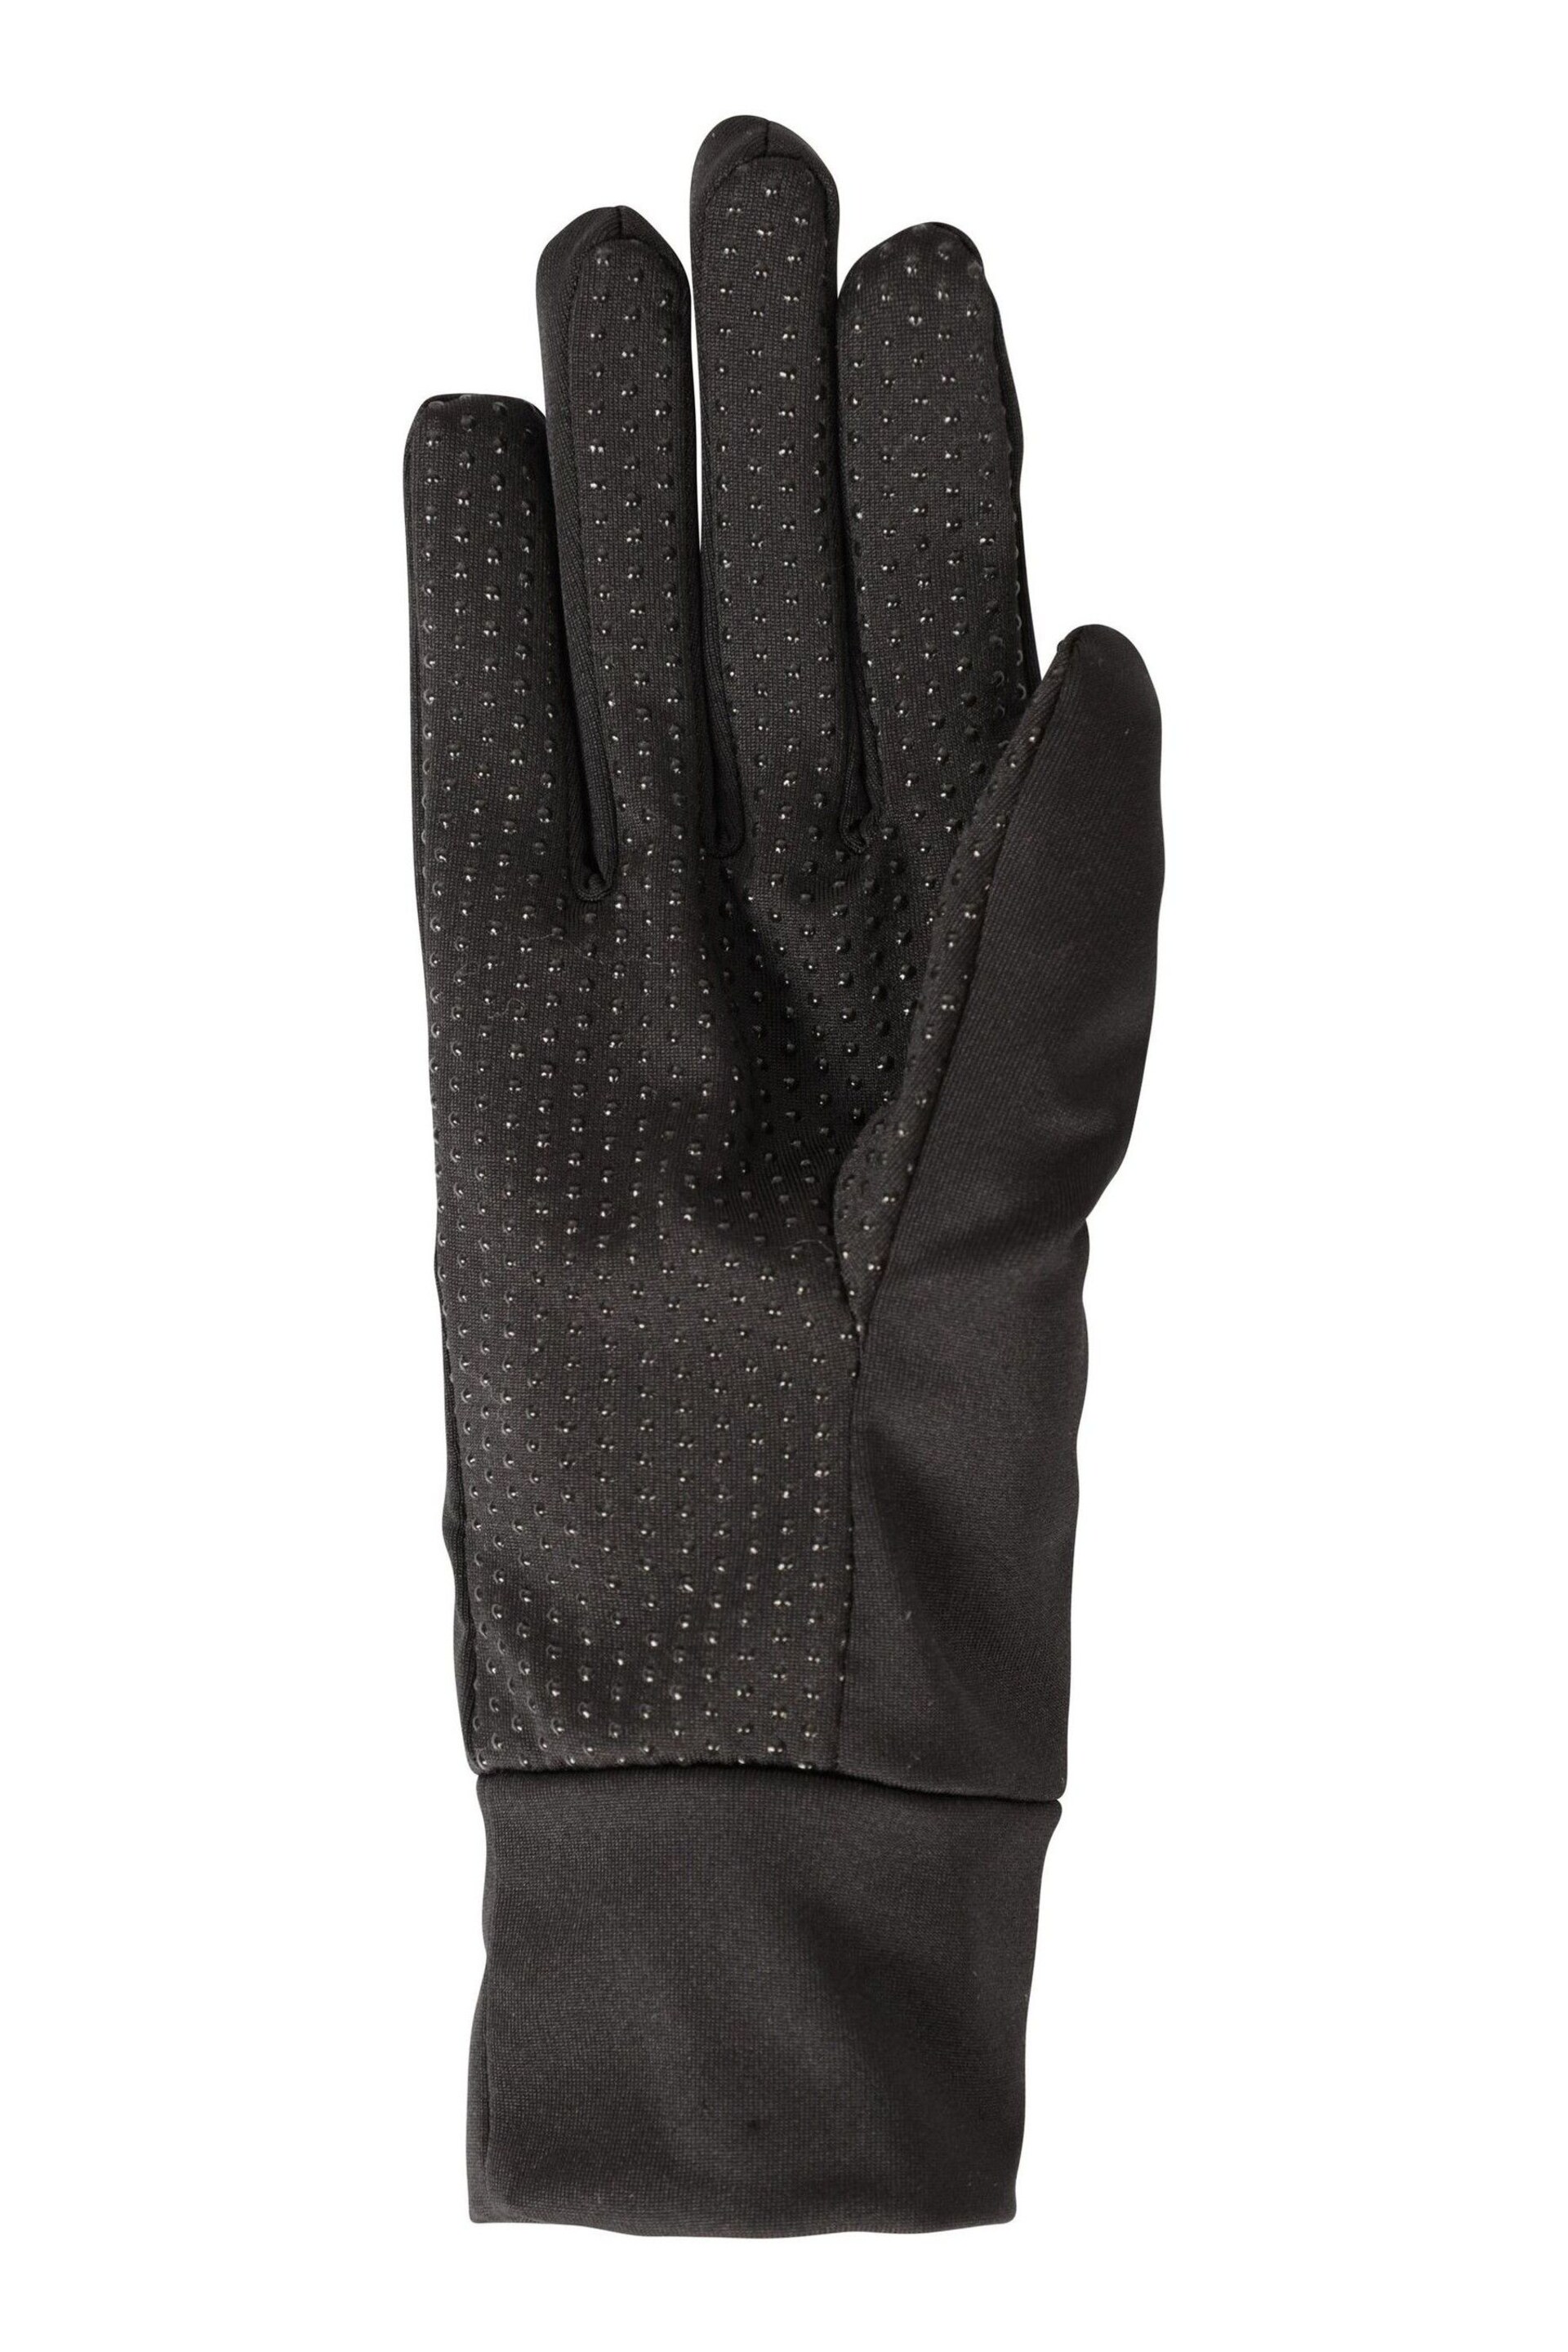 Mountain Warehouse Black Mens Grippi Lining Gloves - Image 3 of 4